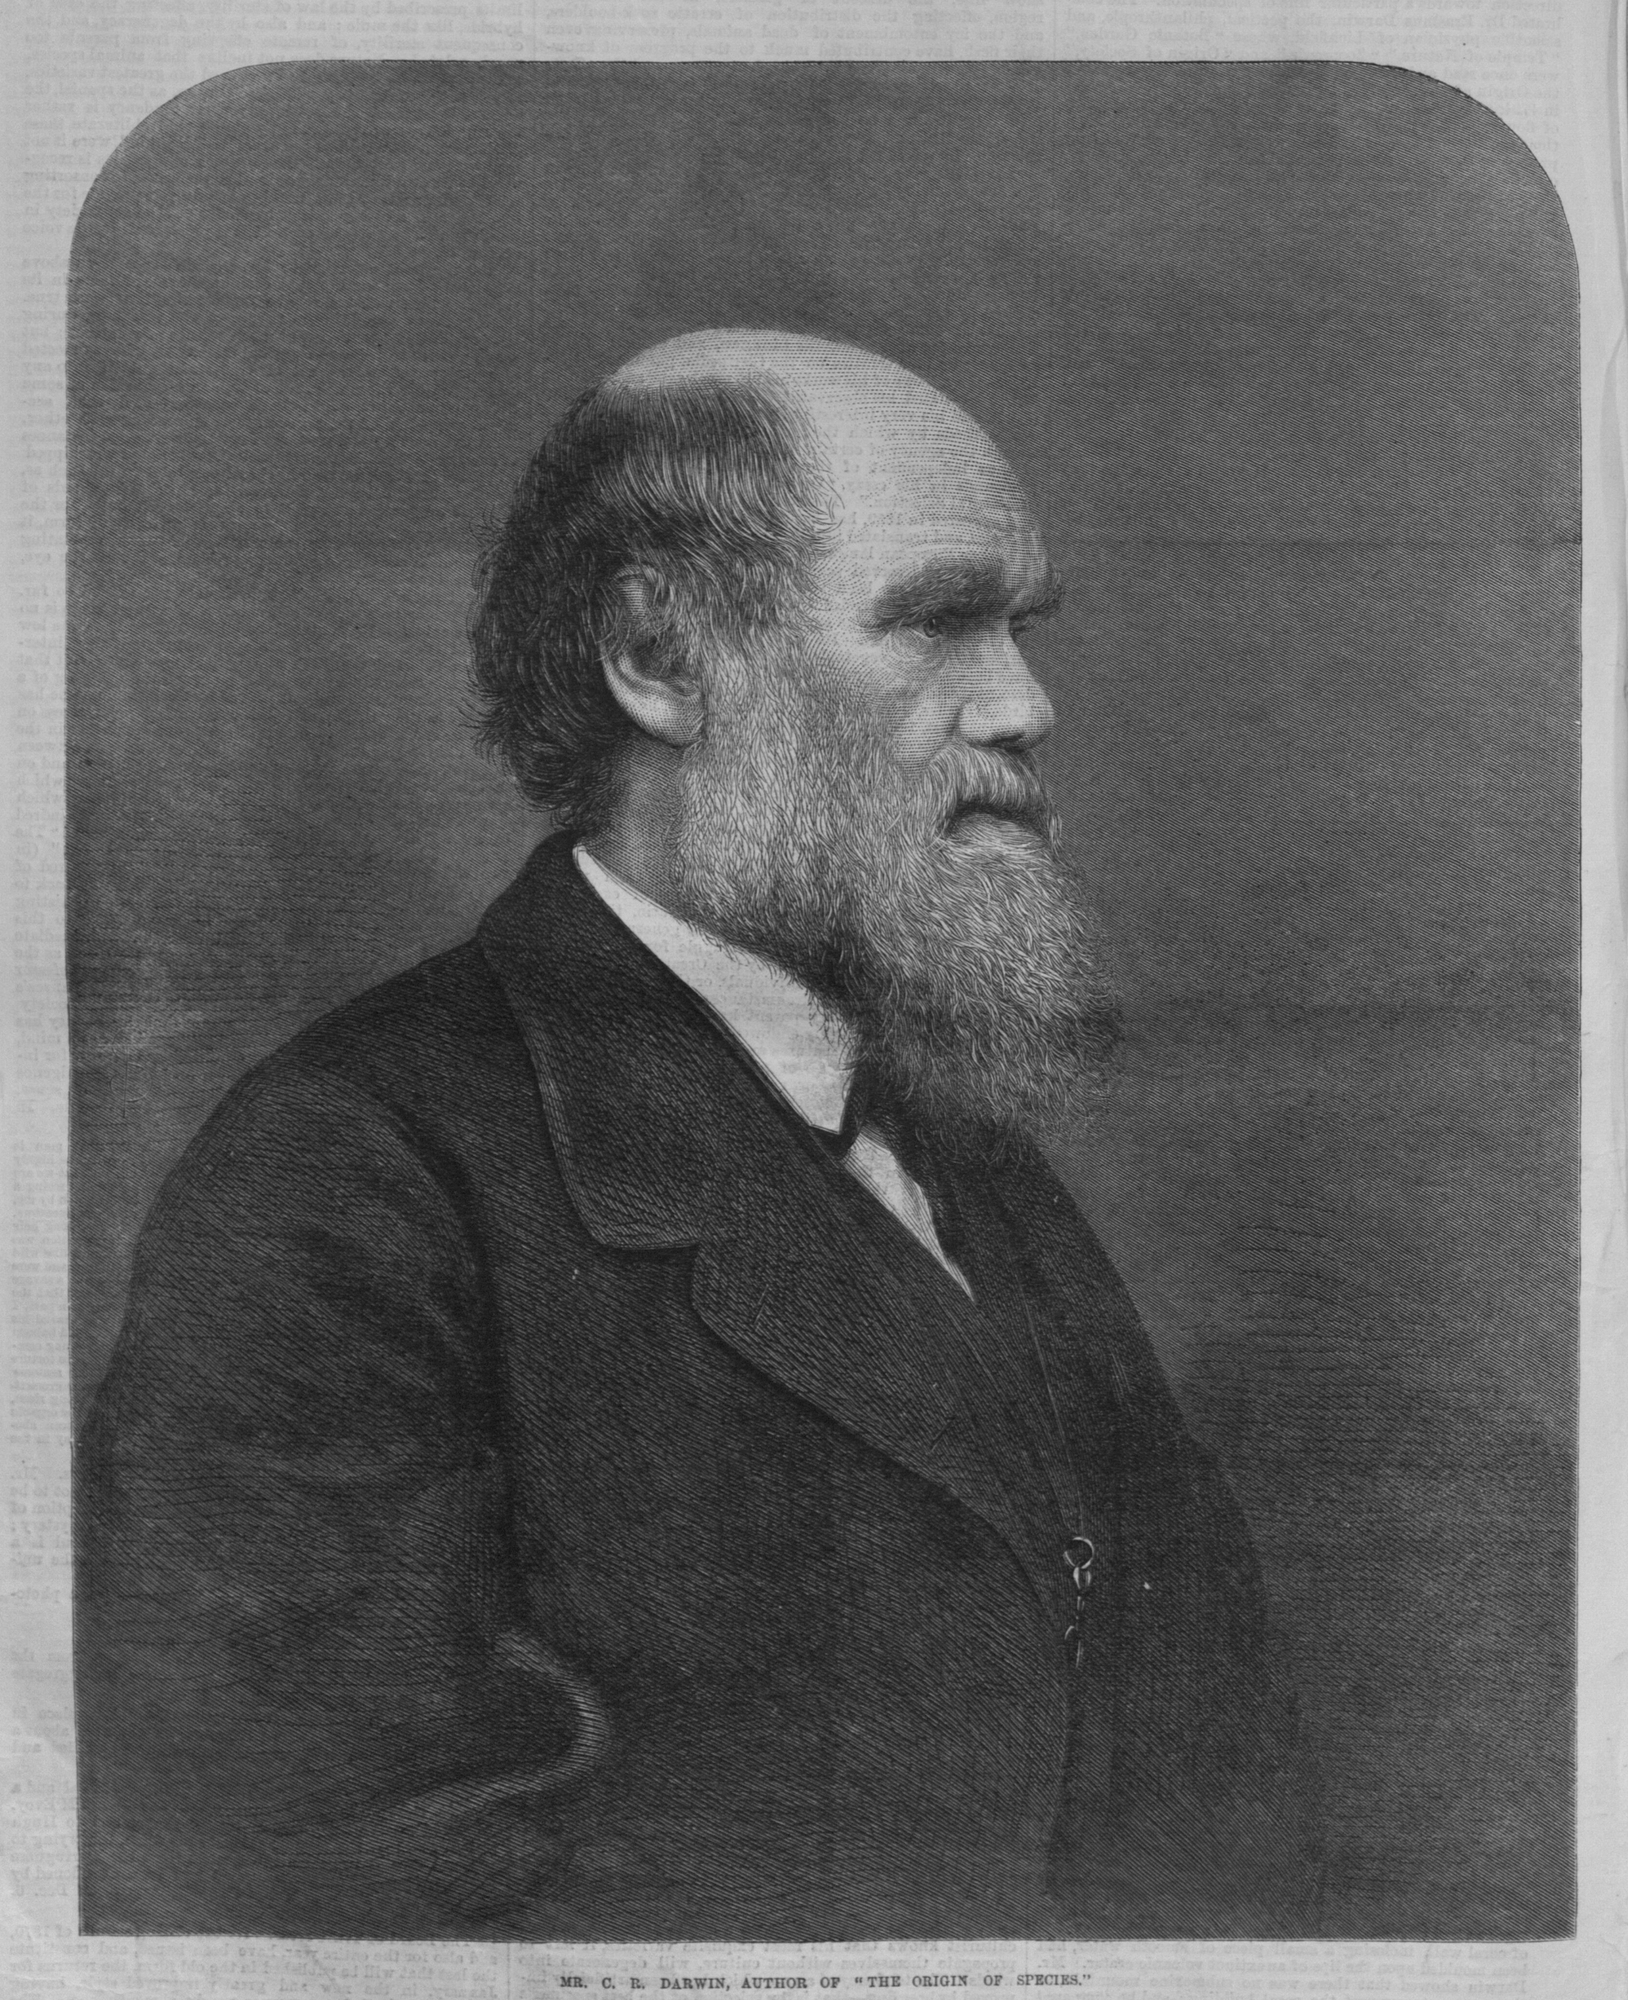 Engraved portrait of Charles Darwin.